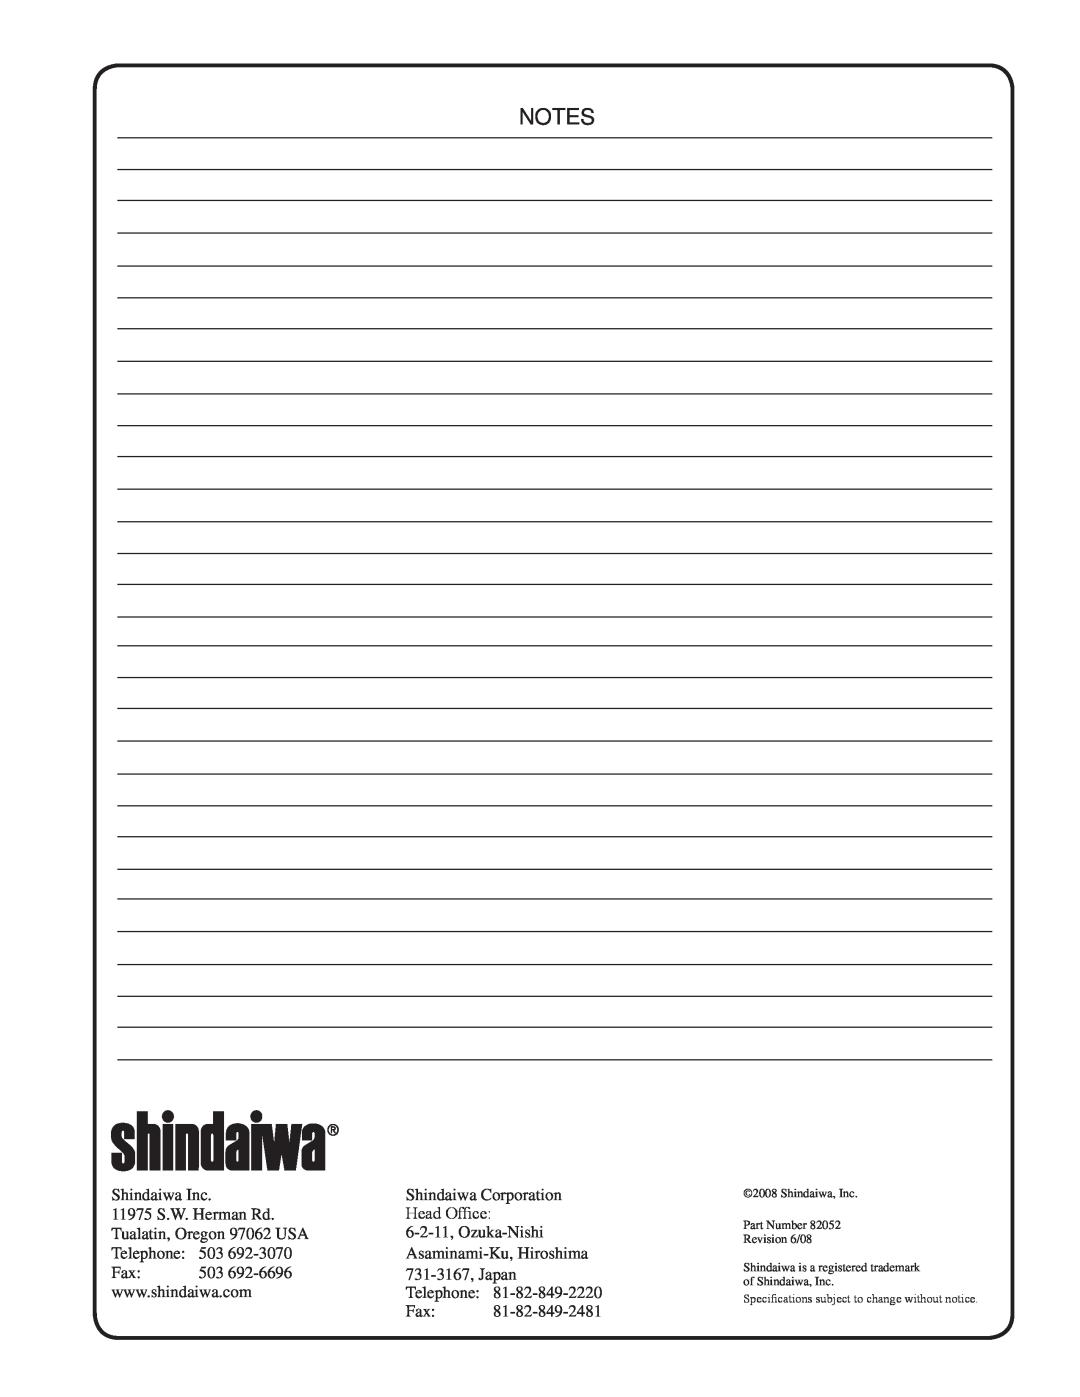 Shindaiwa SV212, 82052 manual notes, Shindaiwa Inc 